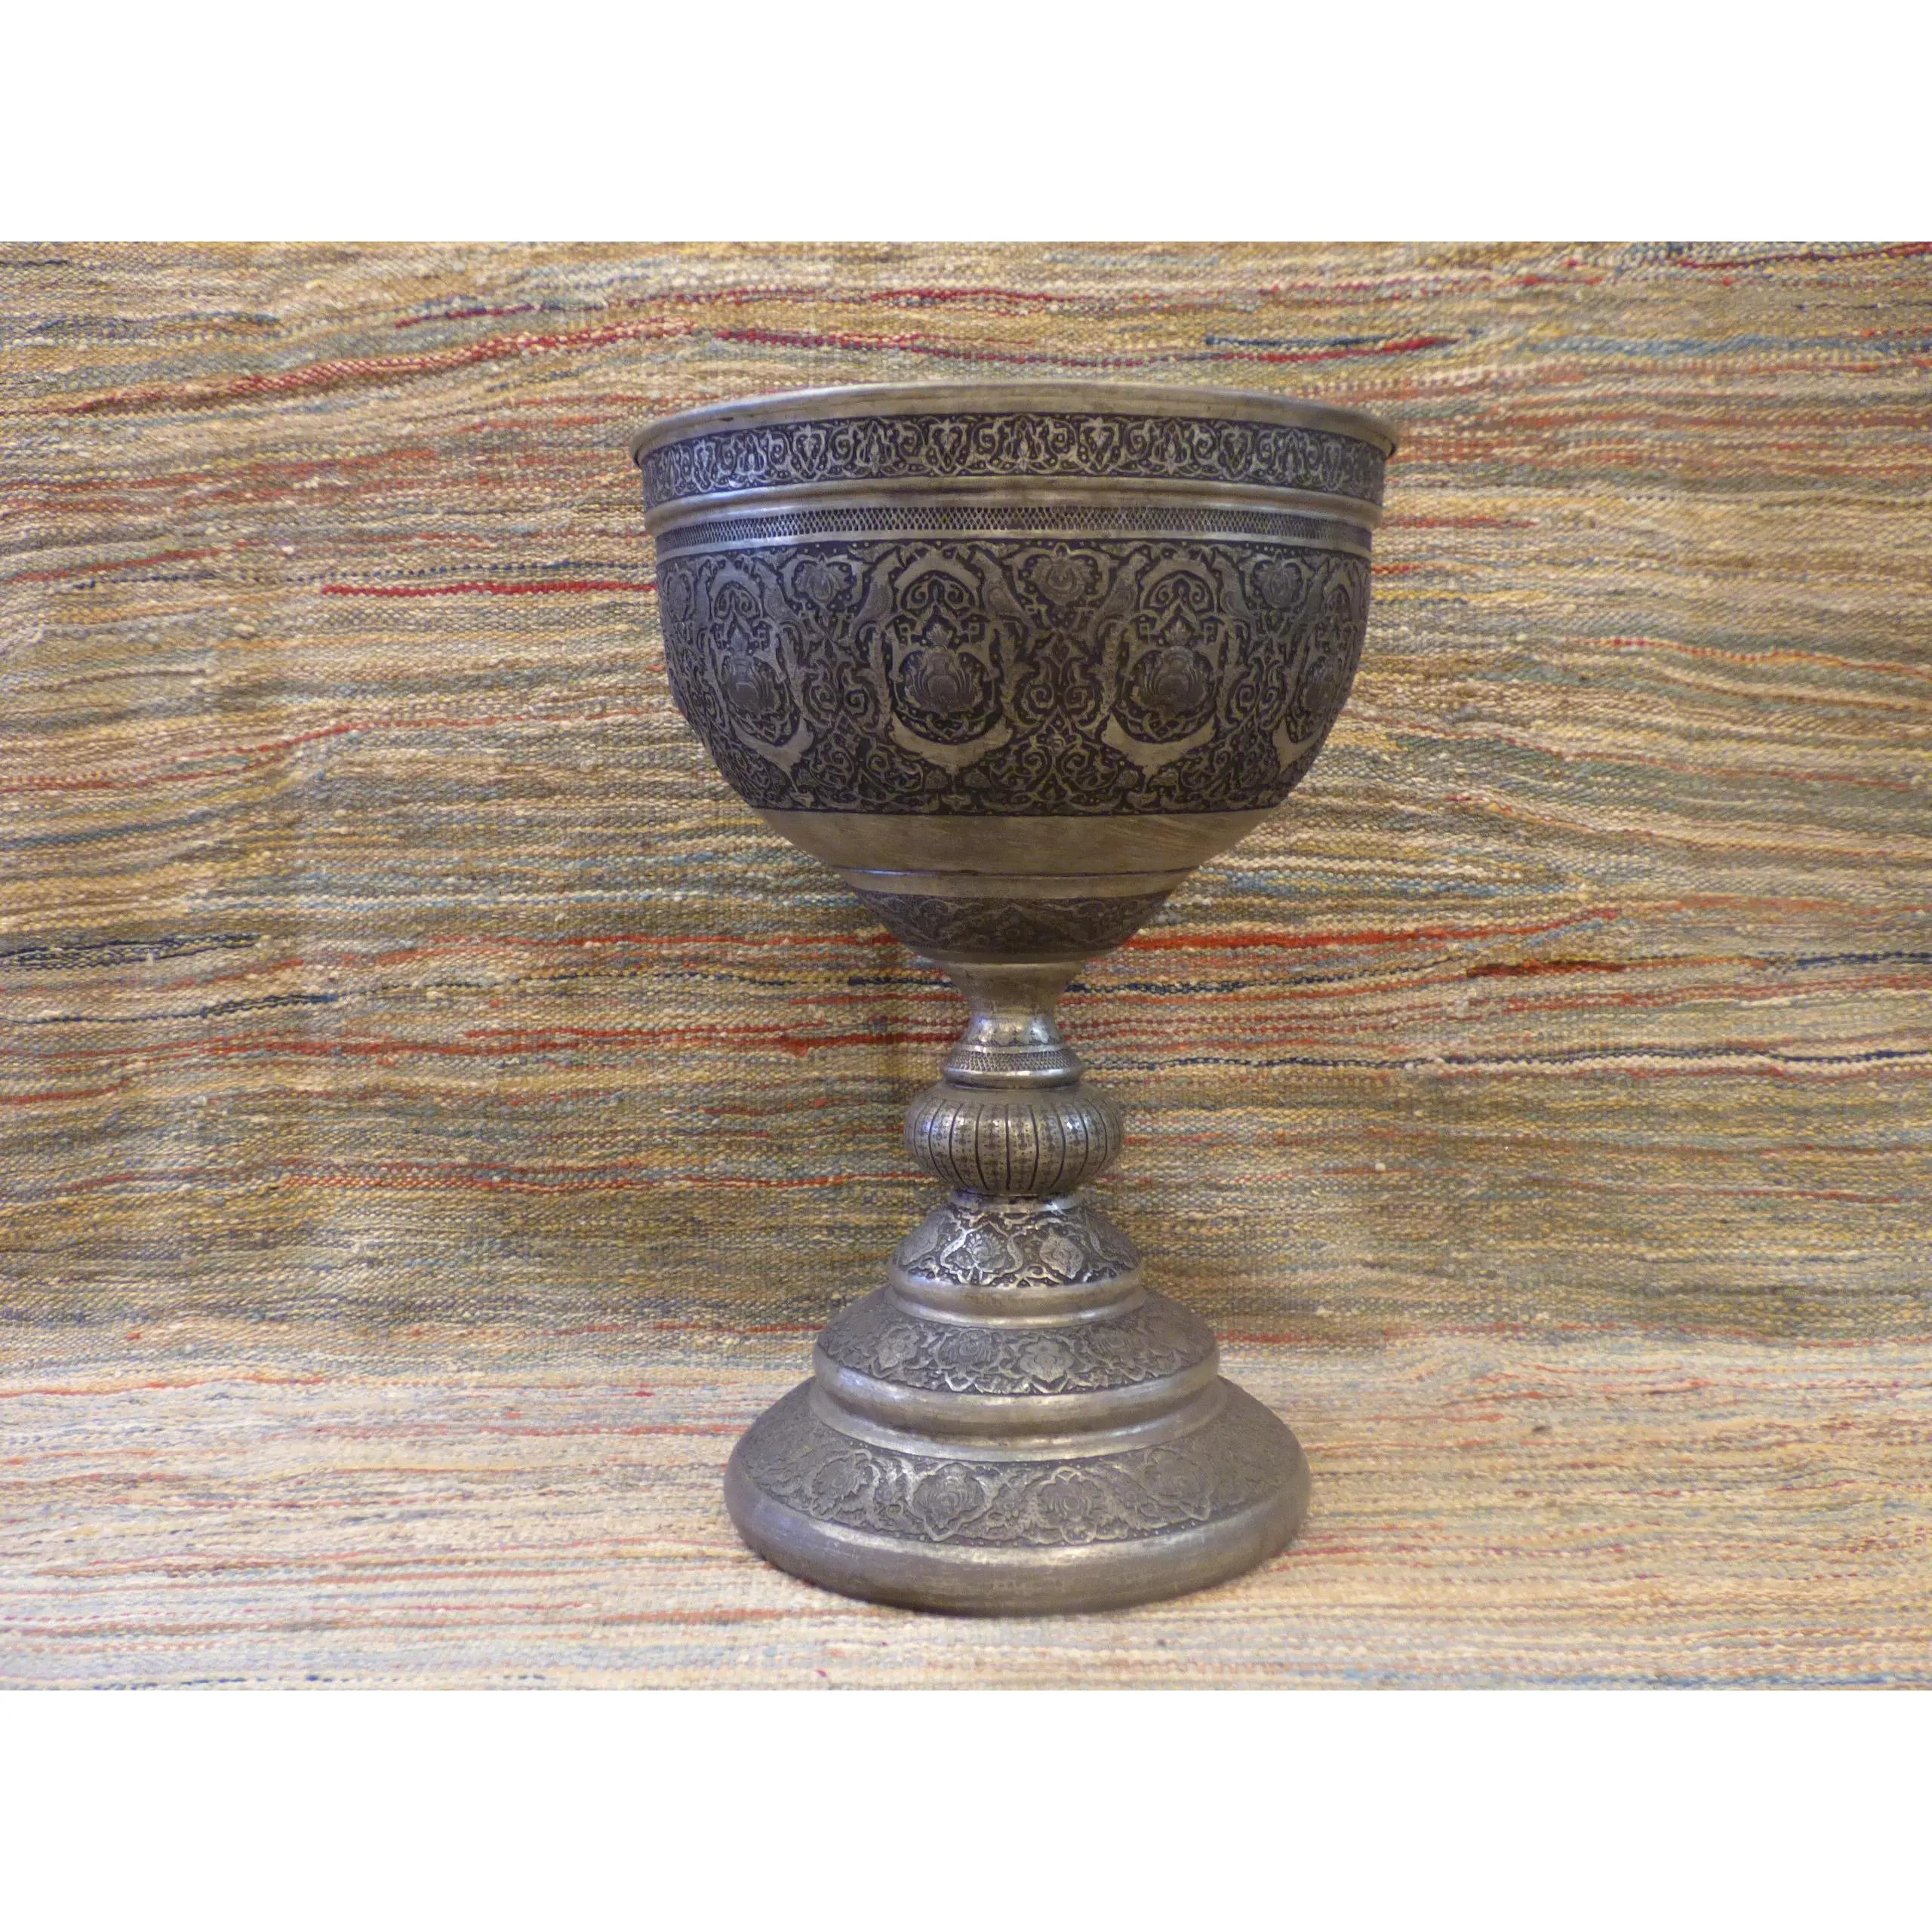 Authentic Art Antique Persian Engraved Brass Vase Ghalamzani 15" X 17" Abcca0108